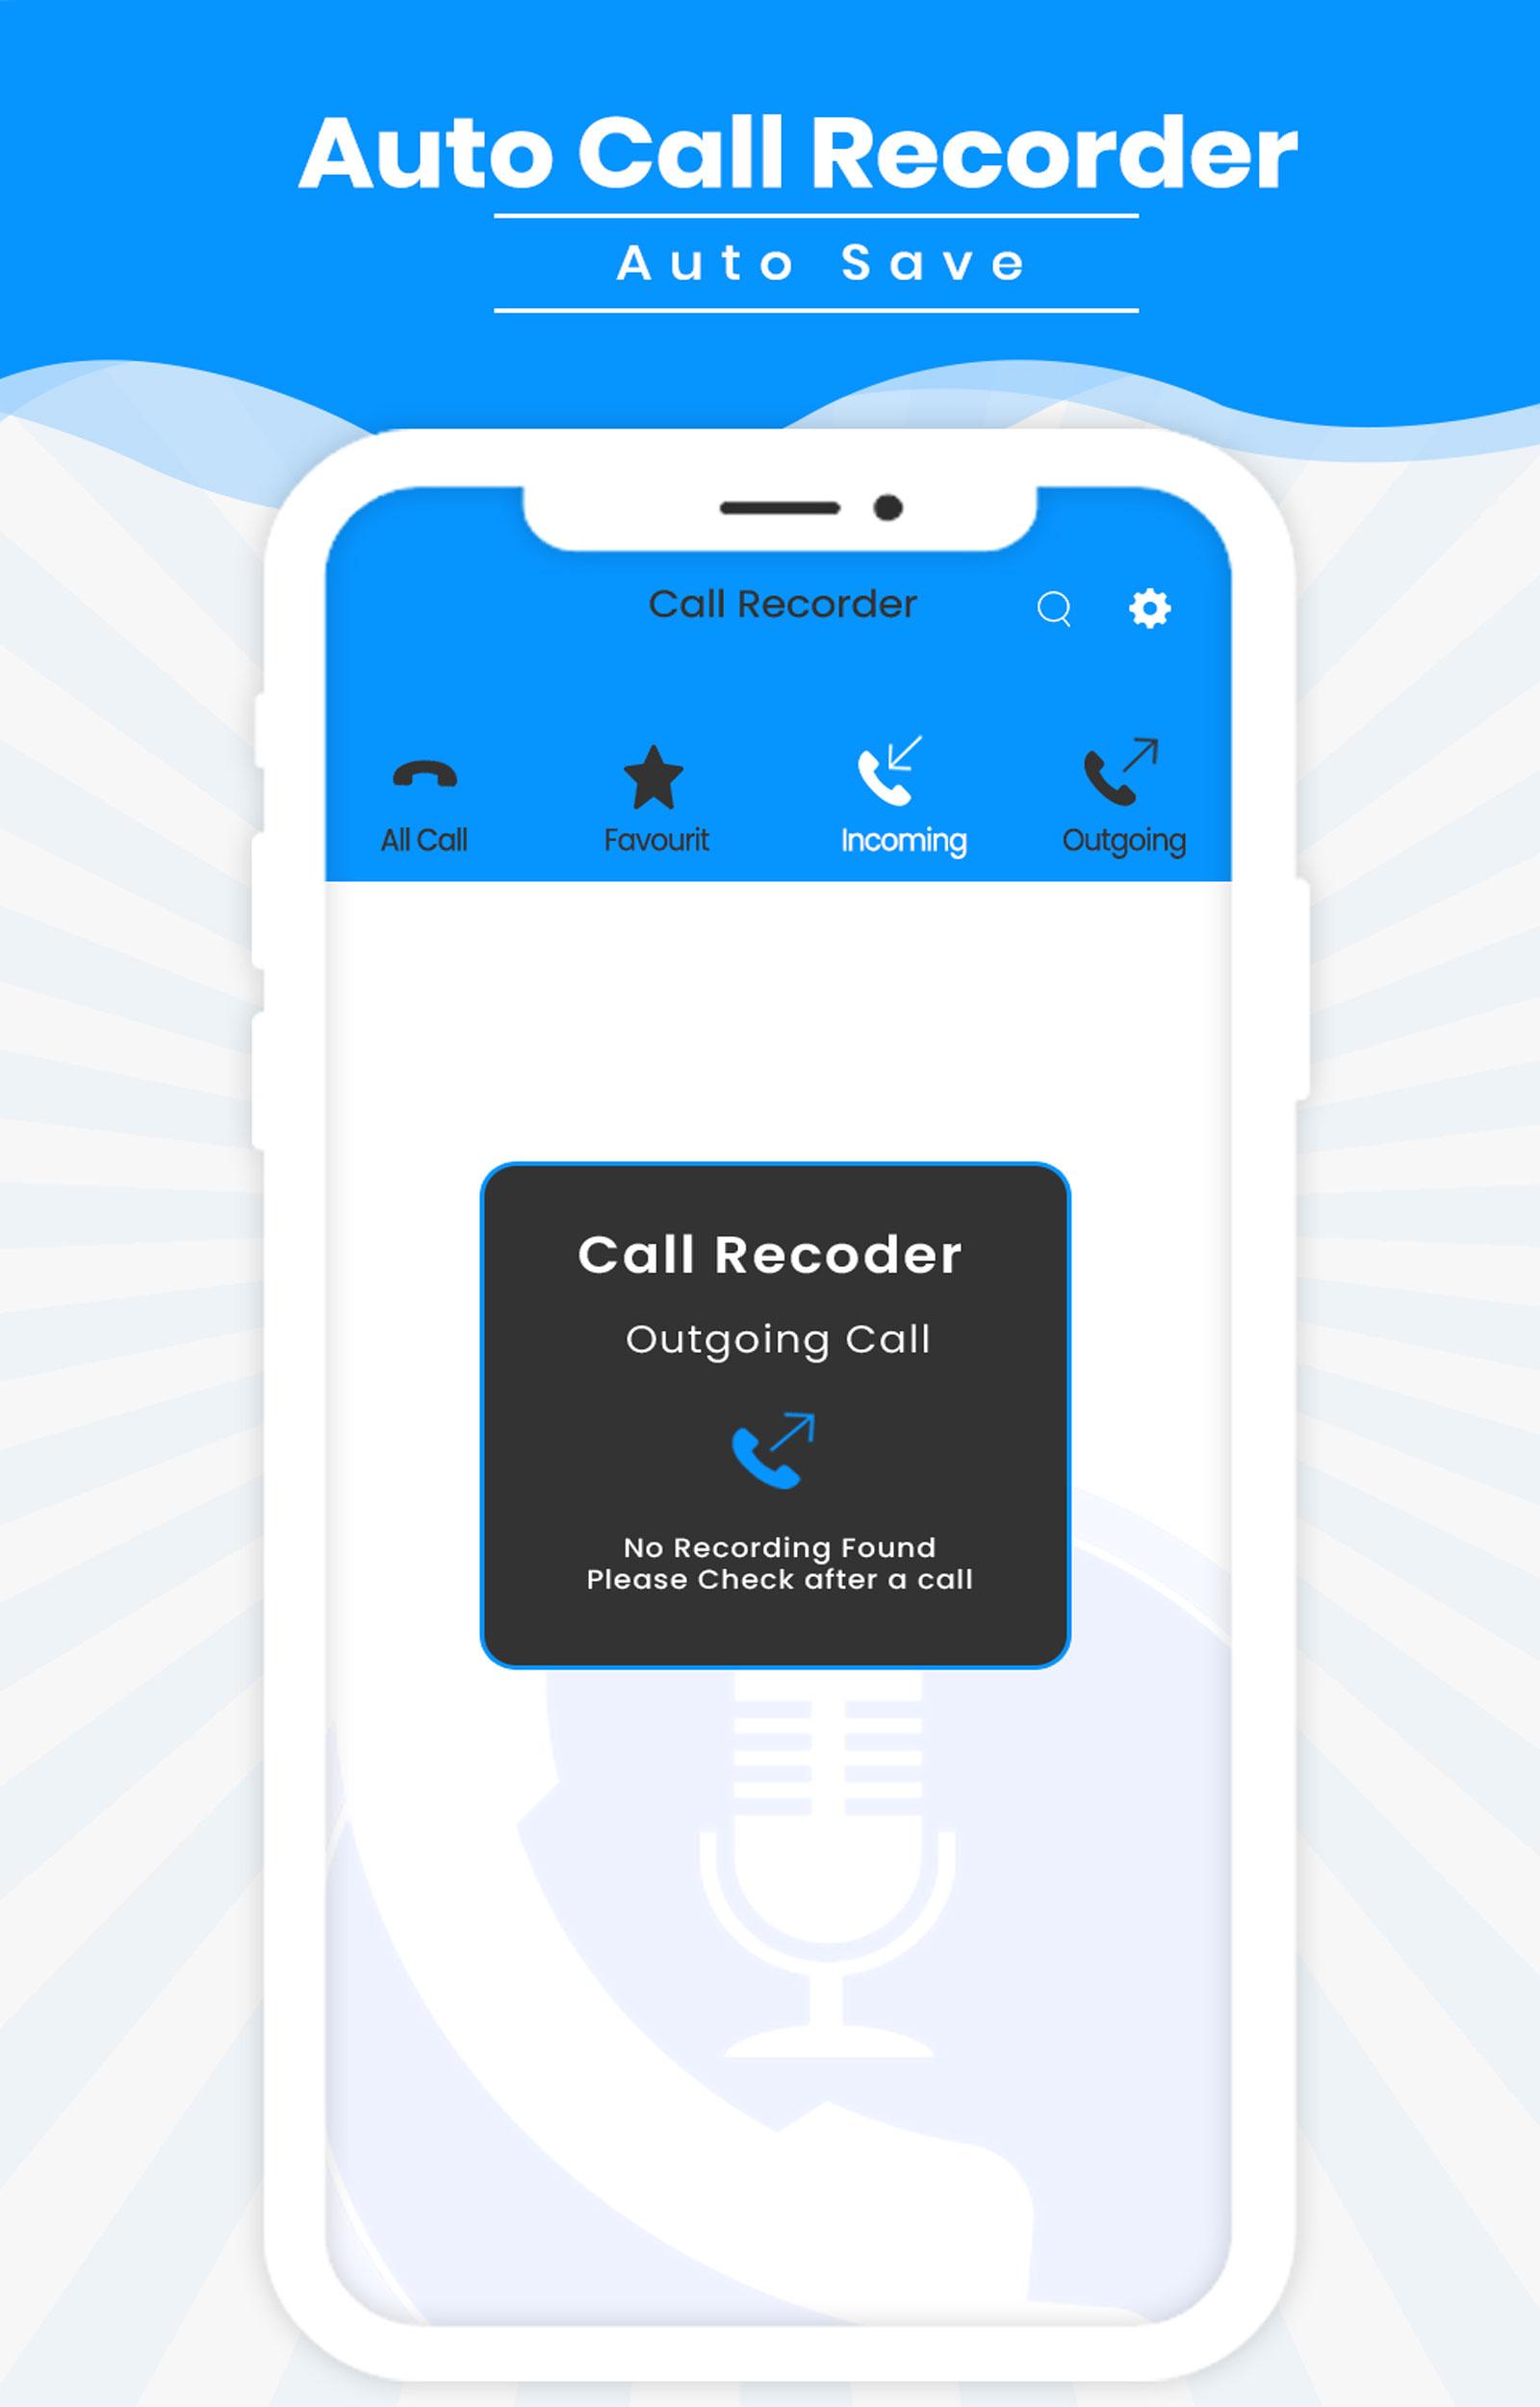 Auto Call Recorder - Auto Save 1.0.4 Screenshot 18